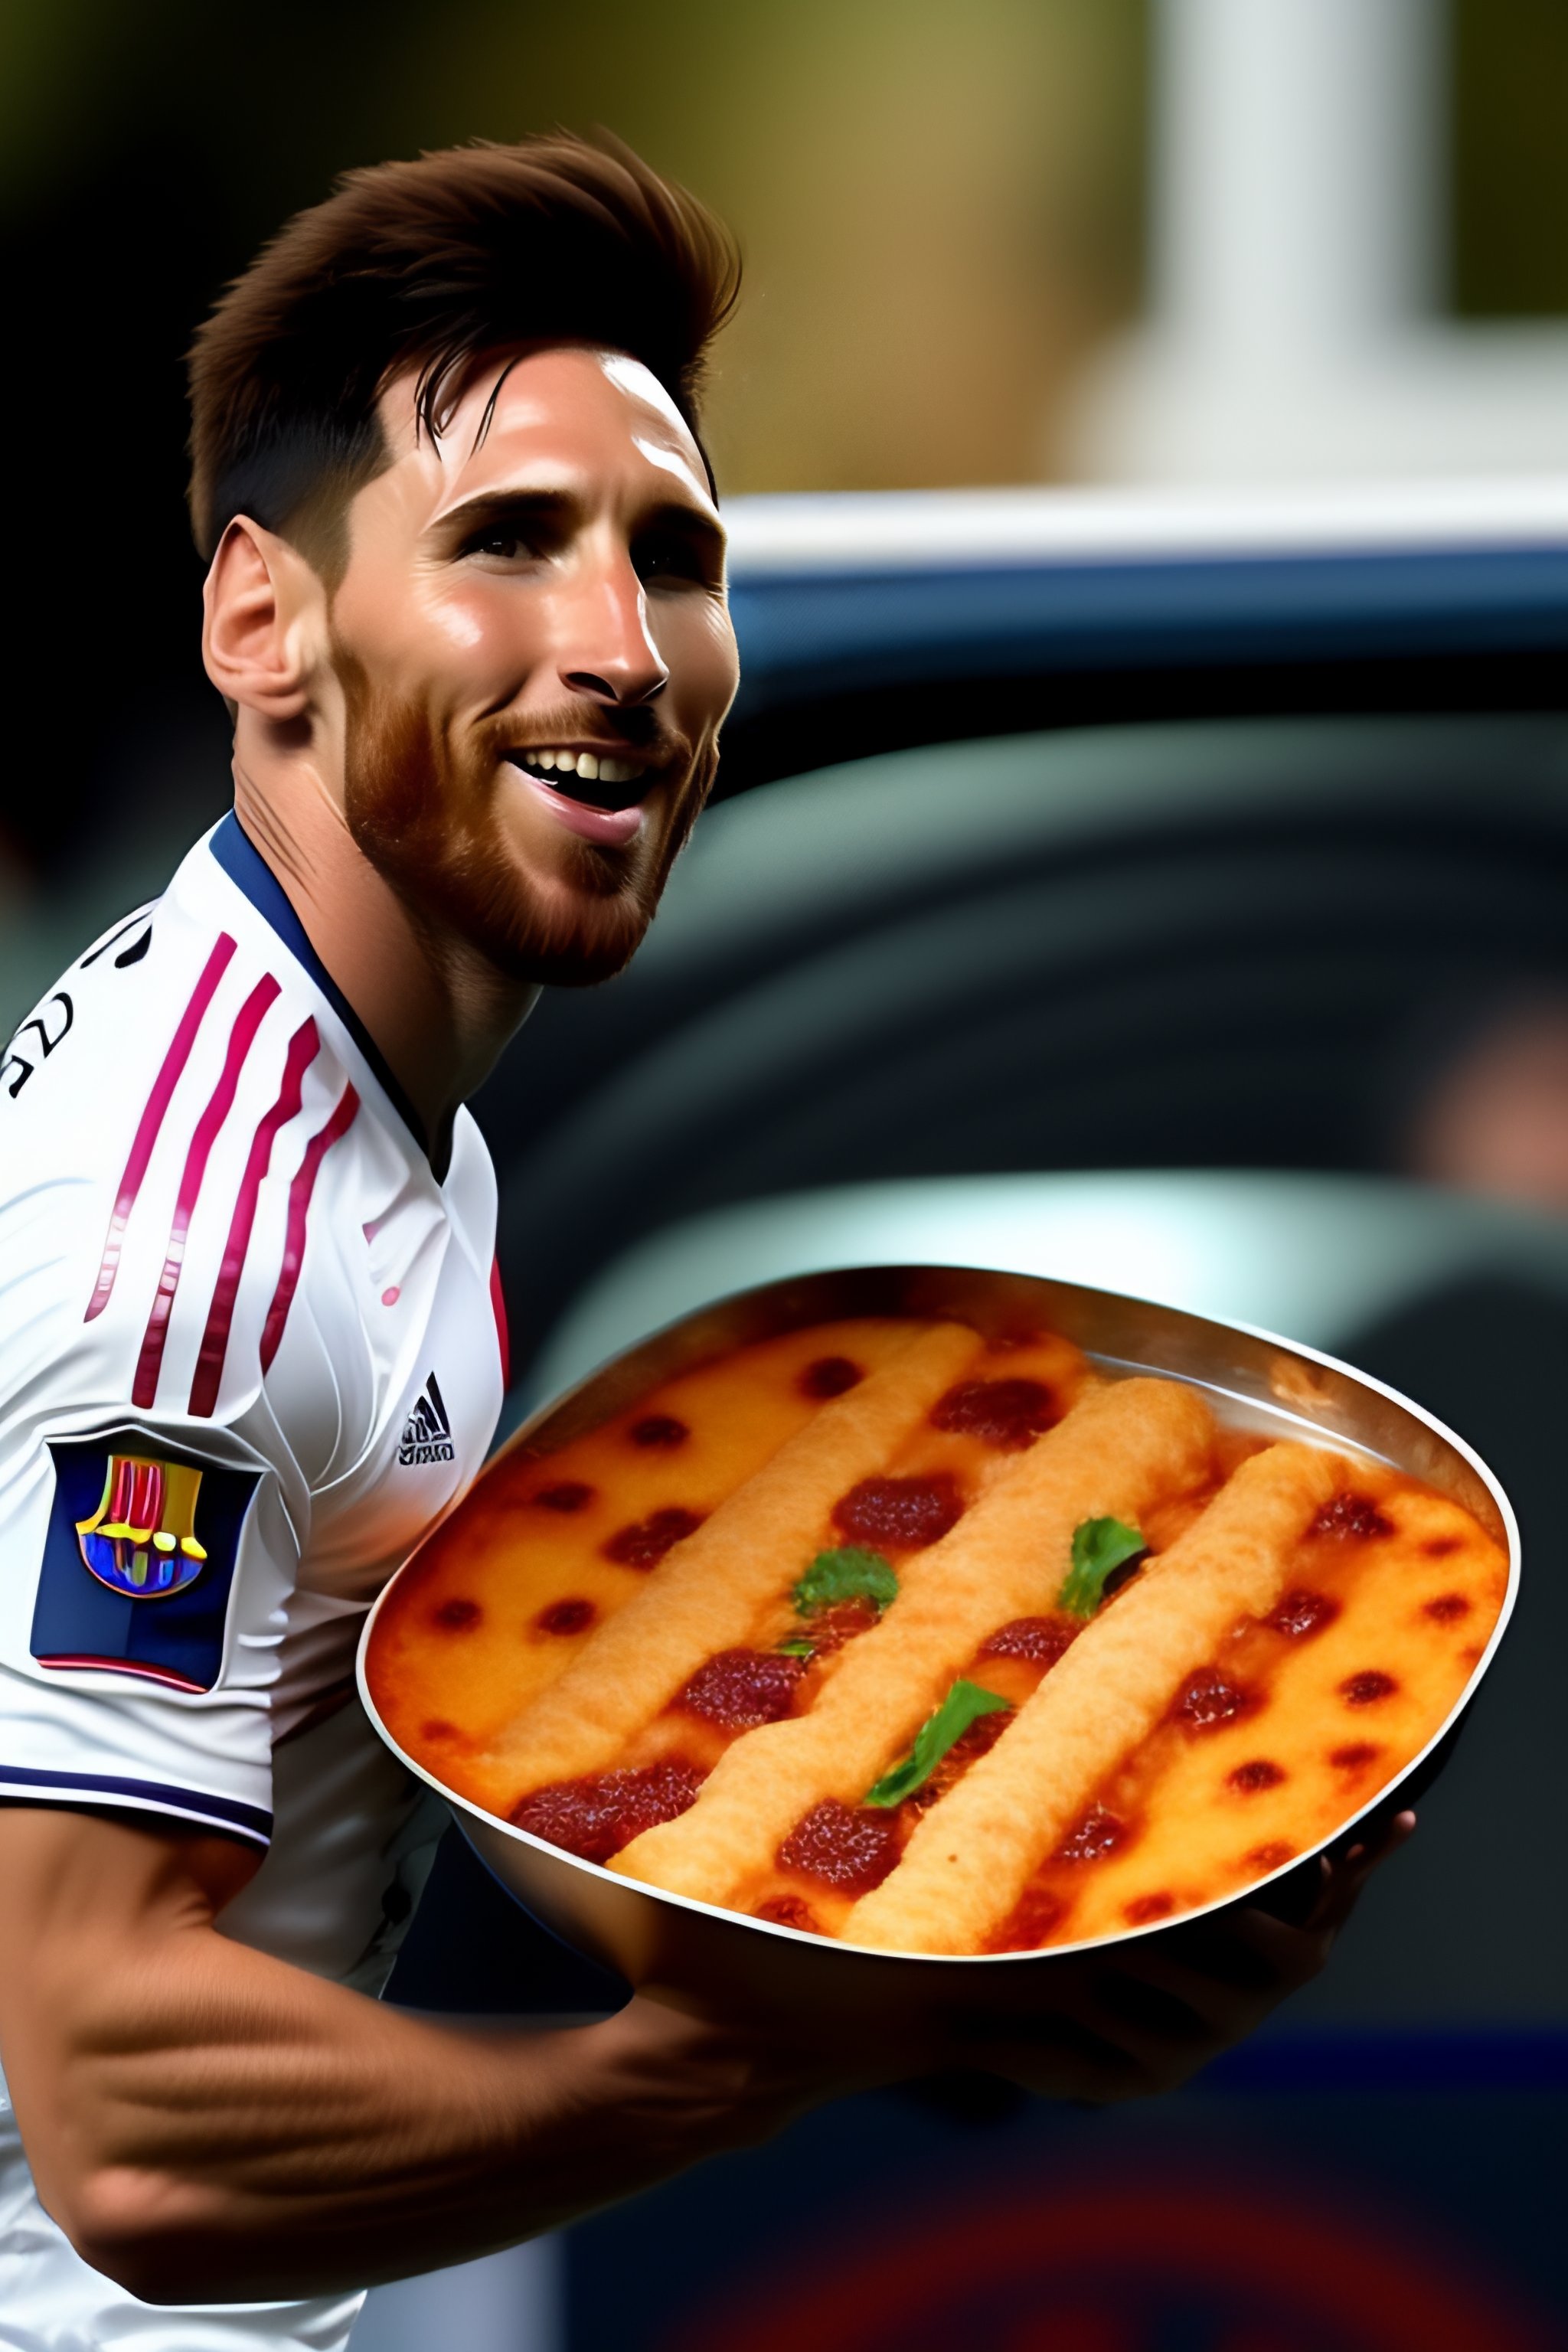 Lexica - Messi eating burritos